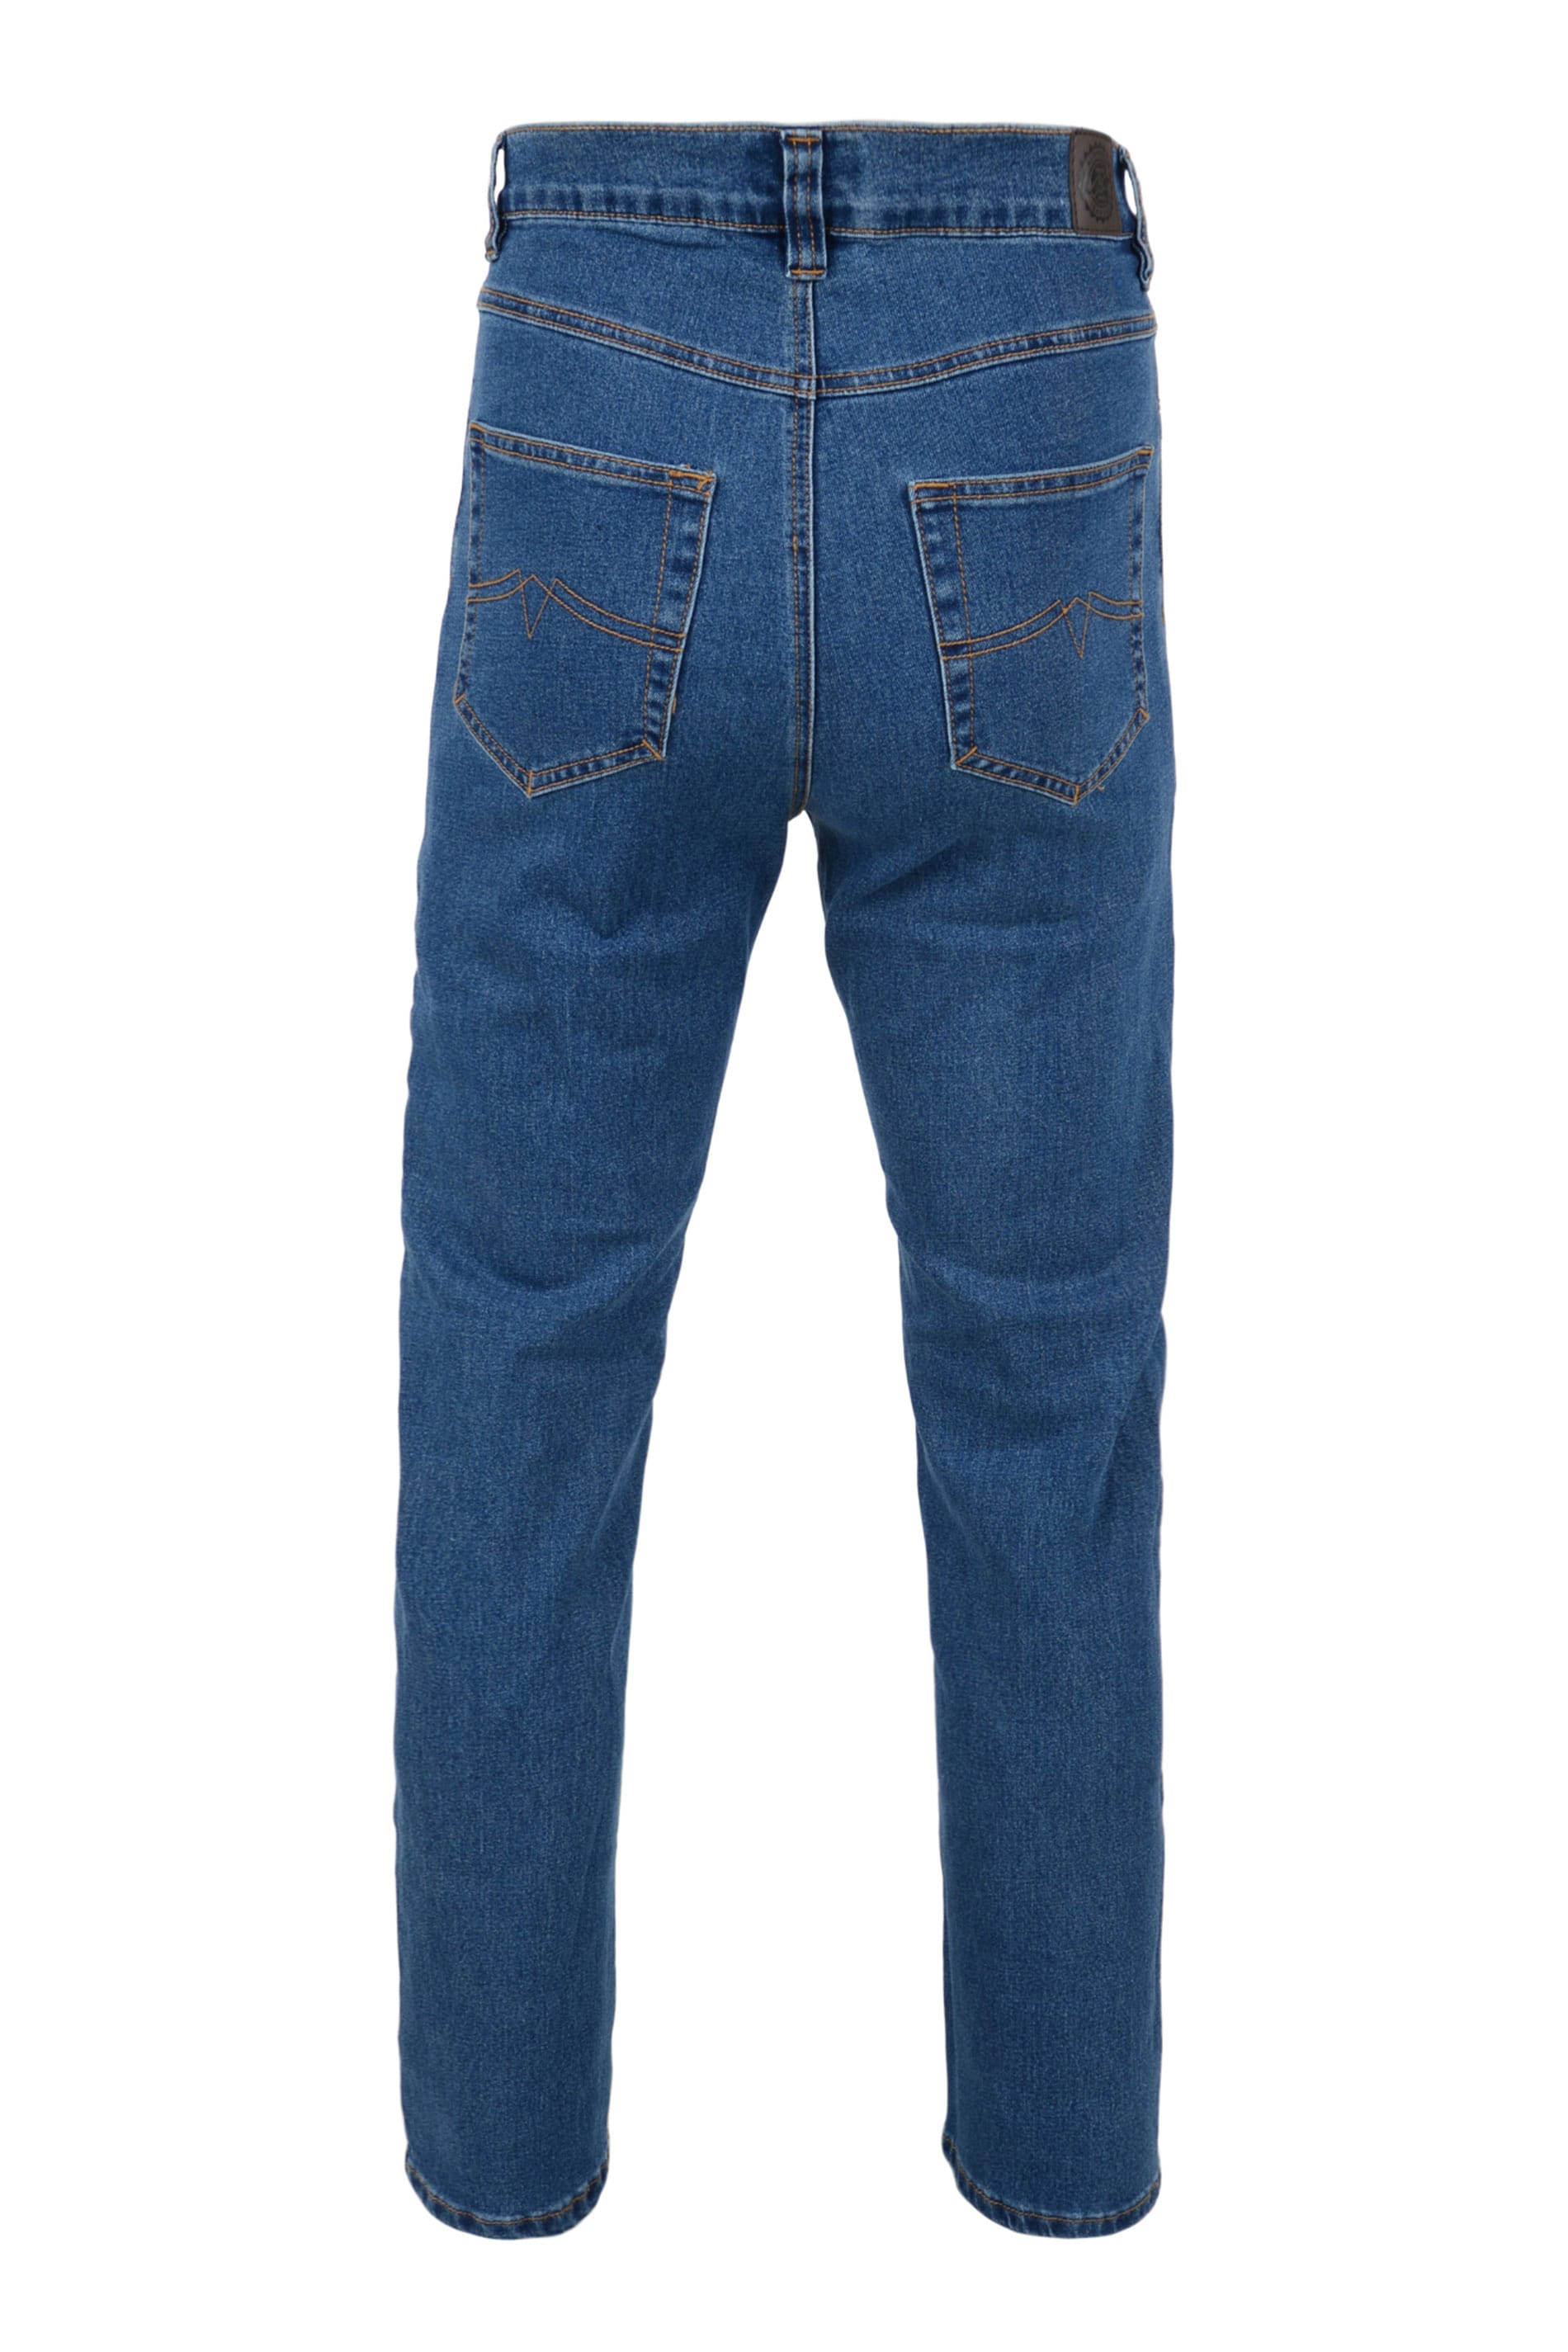 KAM Blue Regular Fit Stretch Jeans | BadRhino